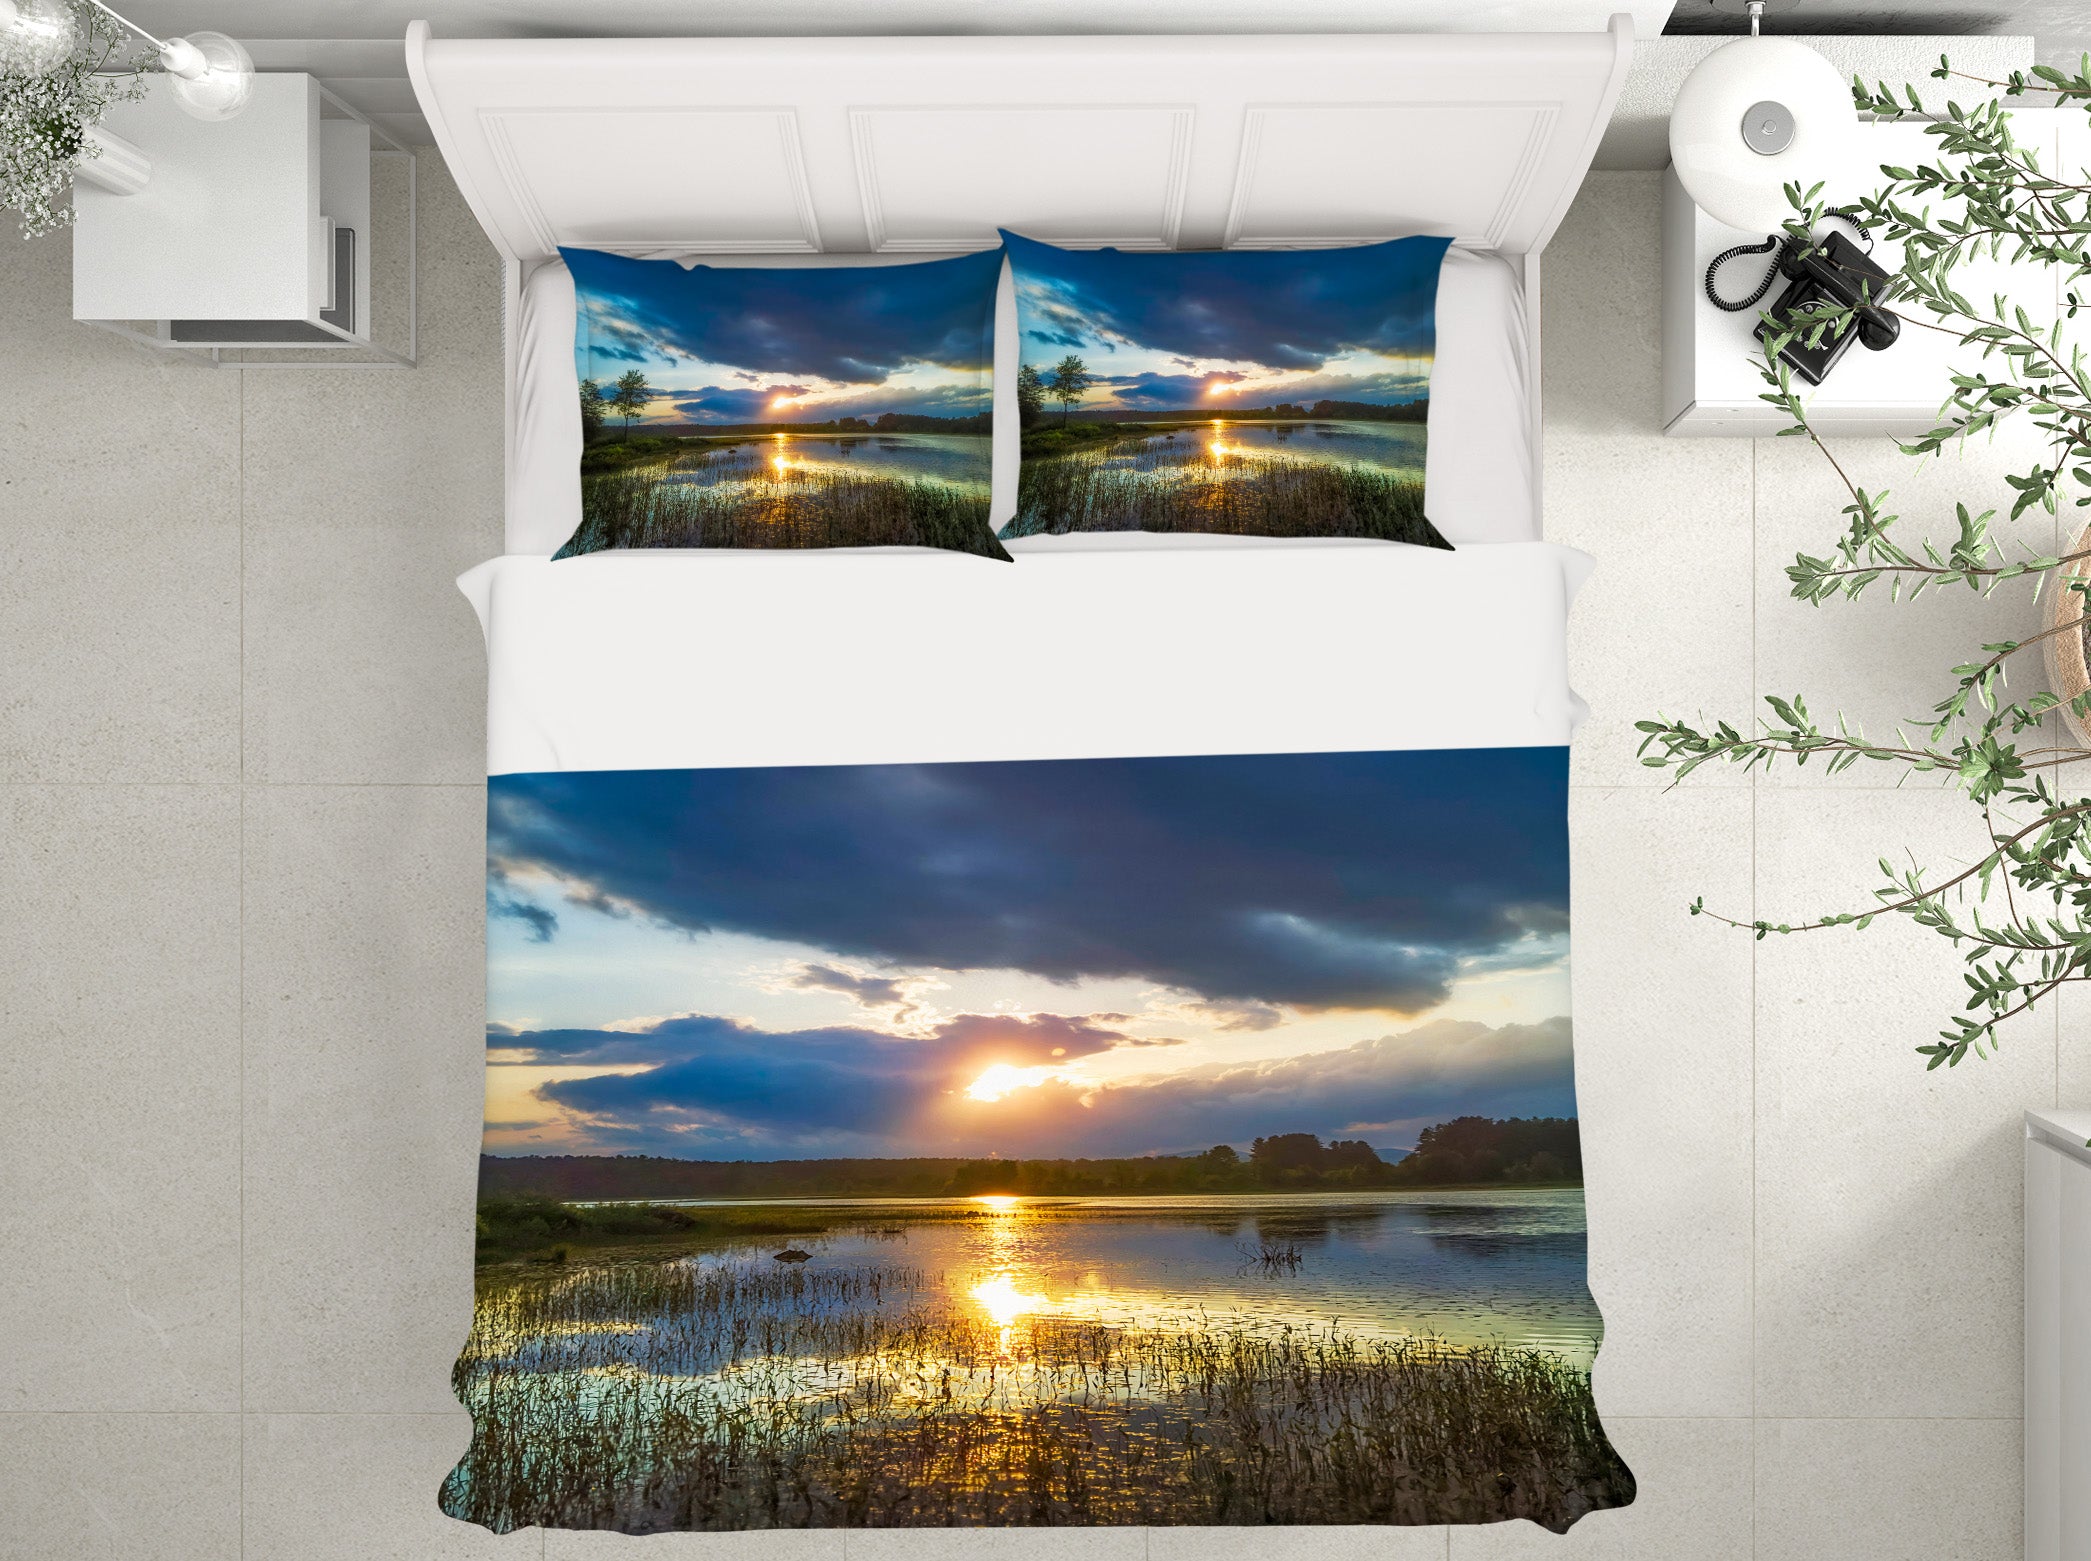 3D Lake Sky 86013 Jerry LoFaro bedding Bed Pillowcases Quilt